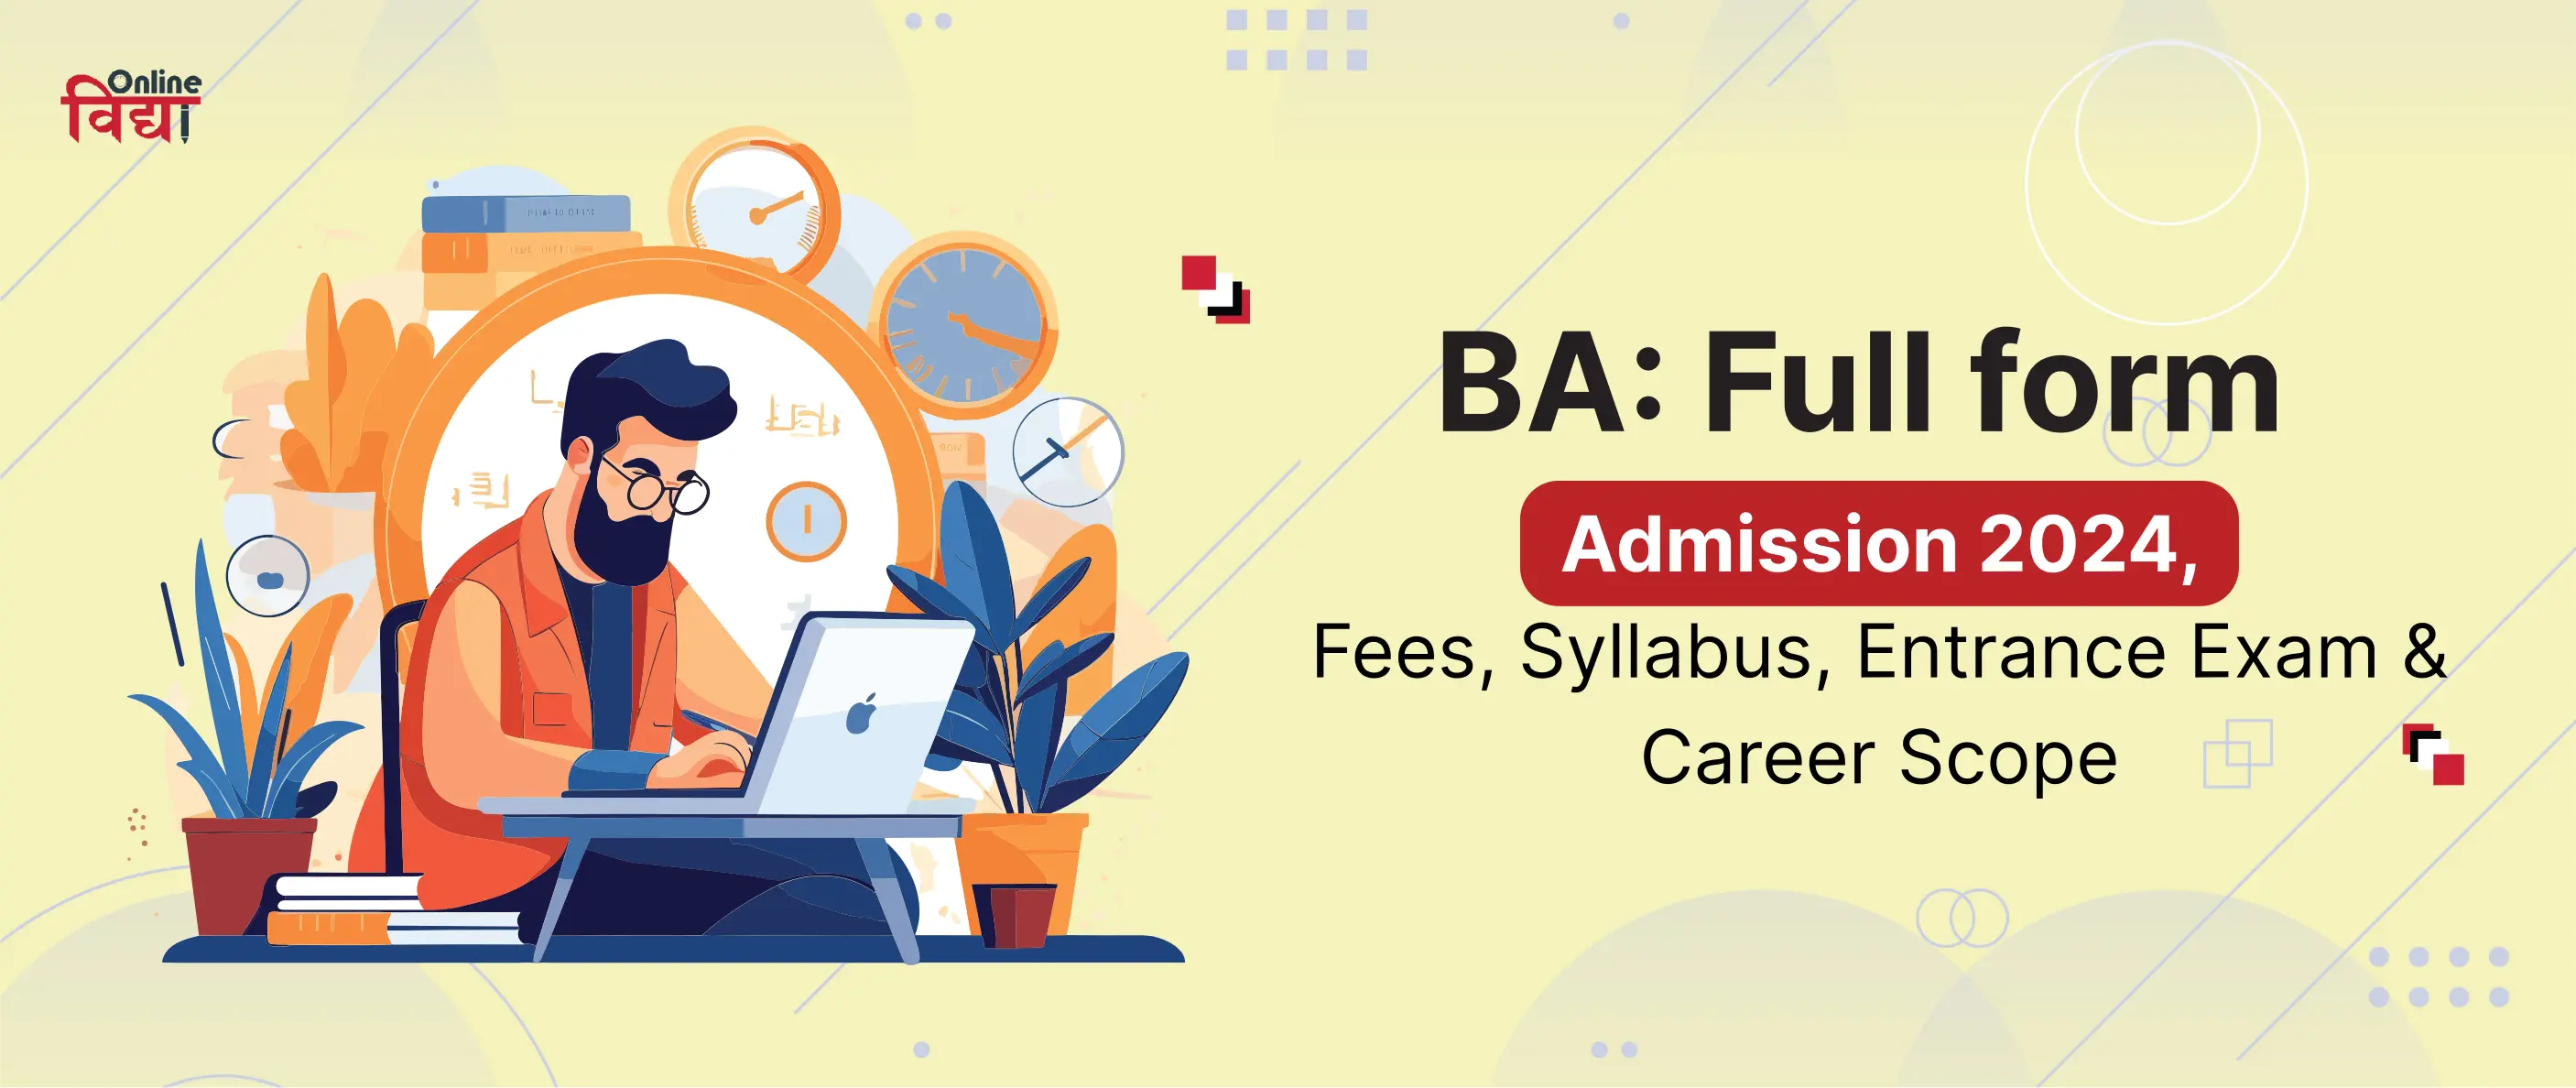 BA: Full form, Admission 2024, Fees, Syllabus, Entrance Exam & Career Scope